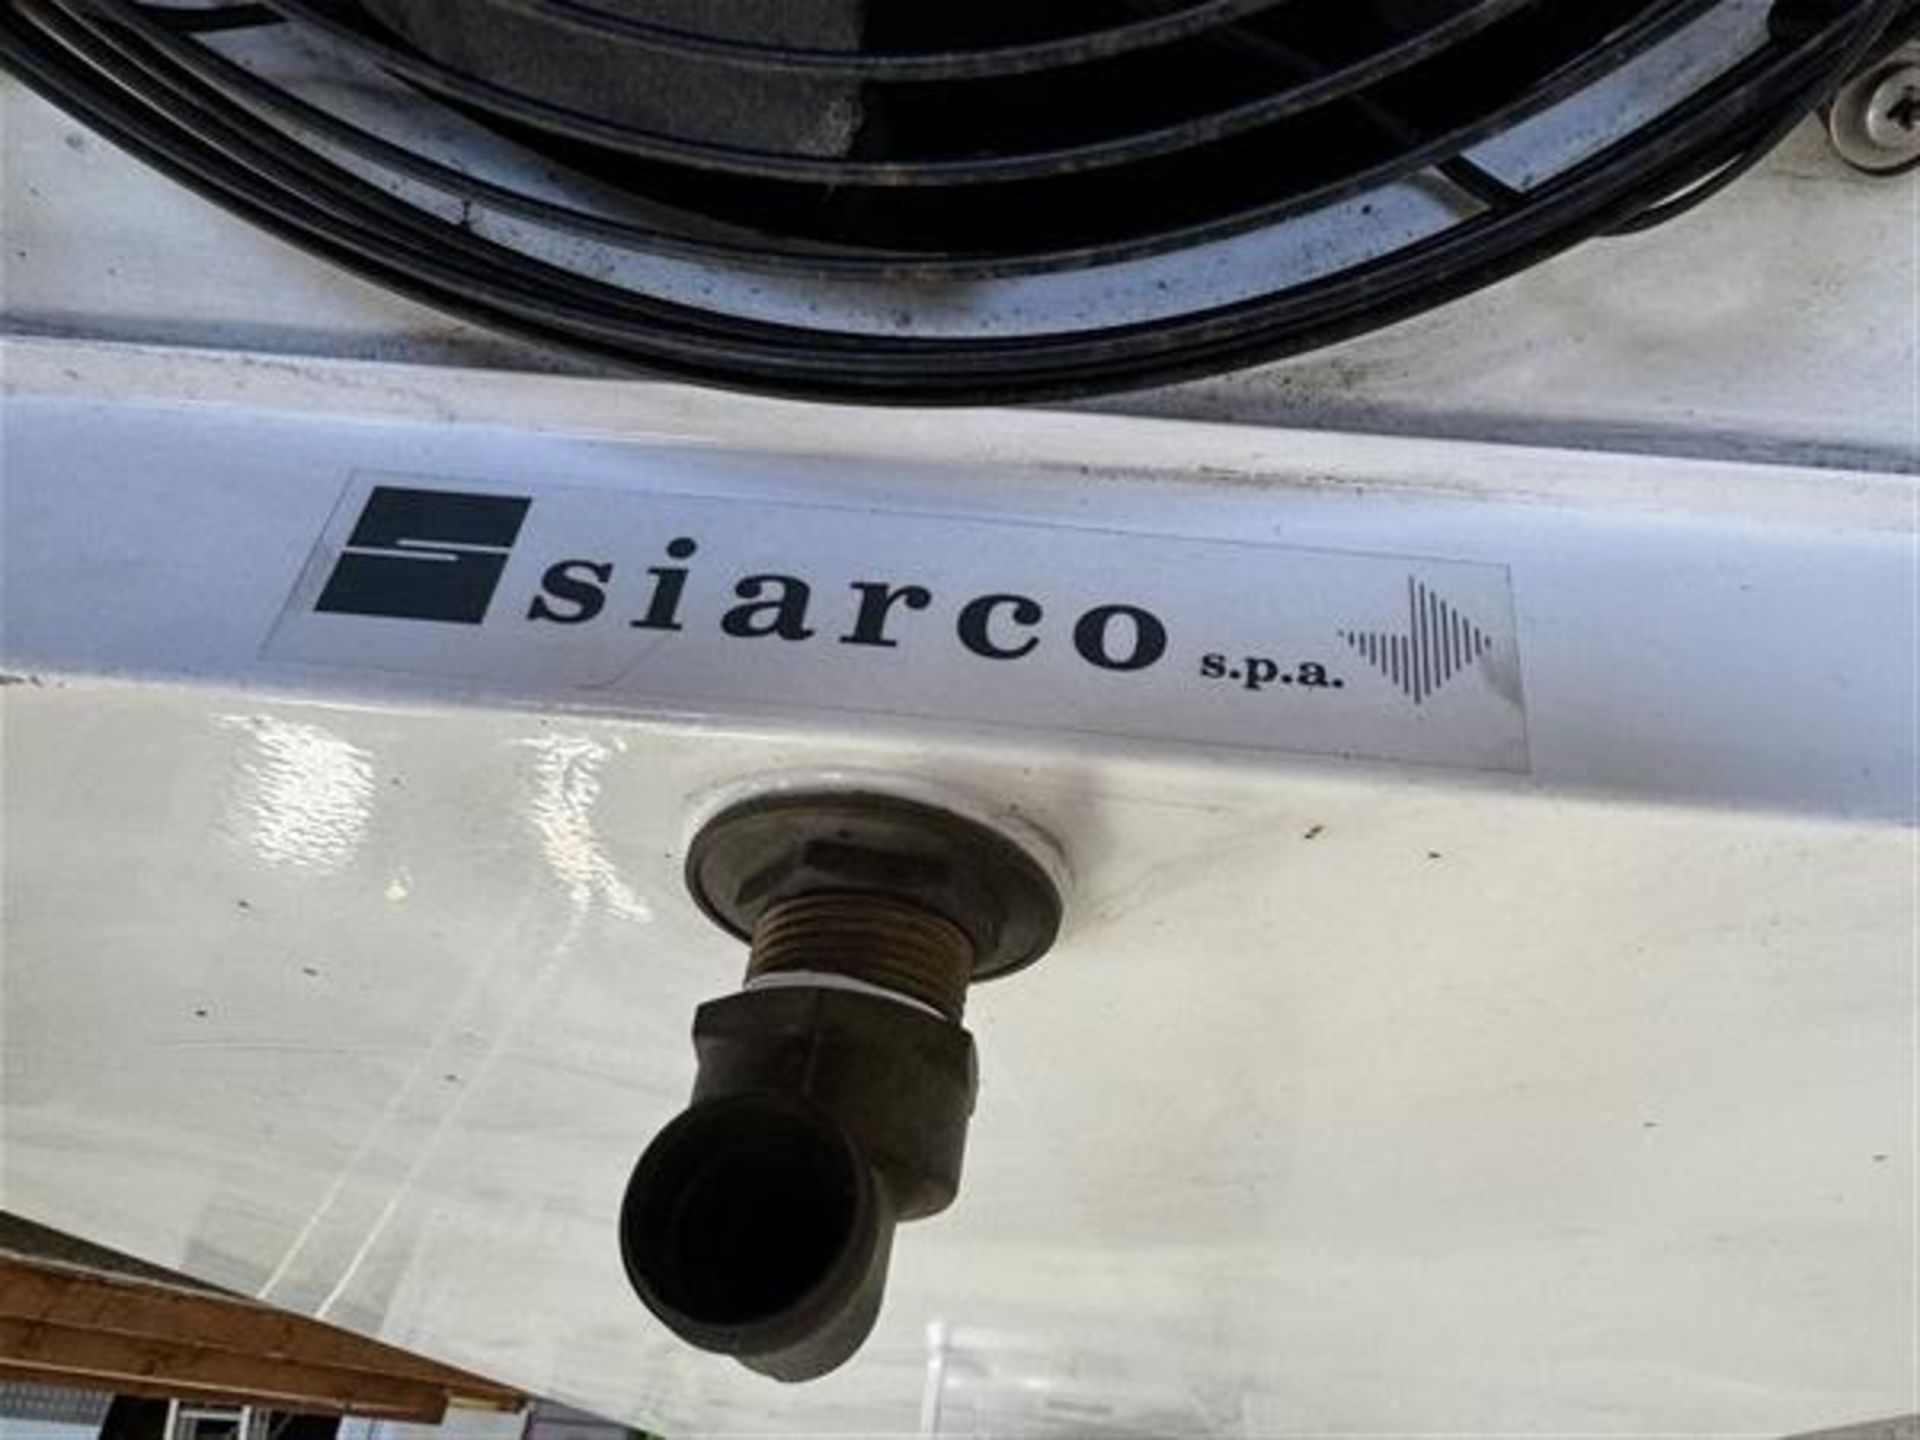 Siarco evaporator, twin fan, no plate - Image 3 of 5